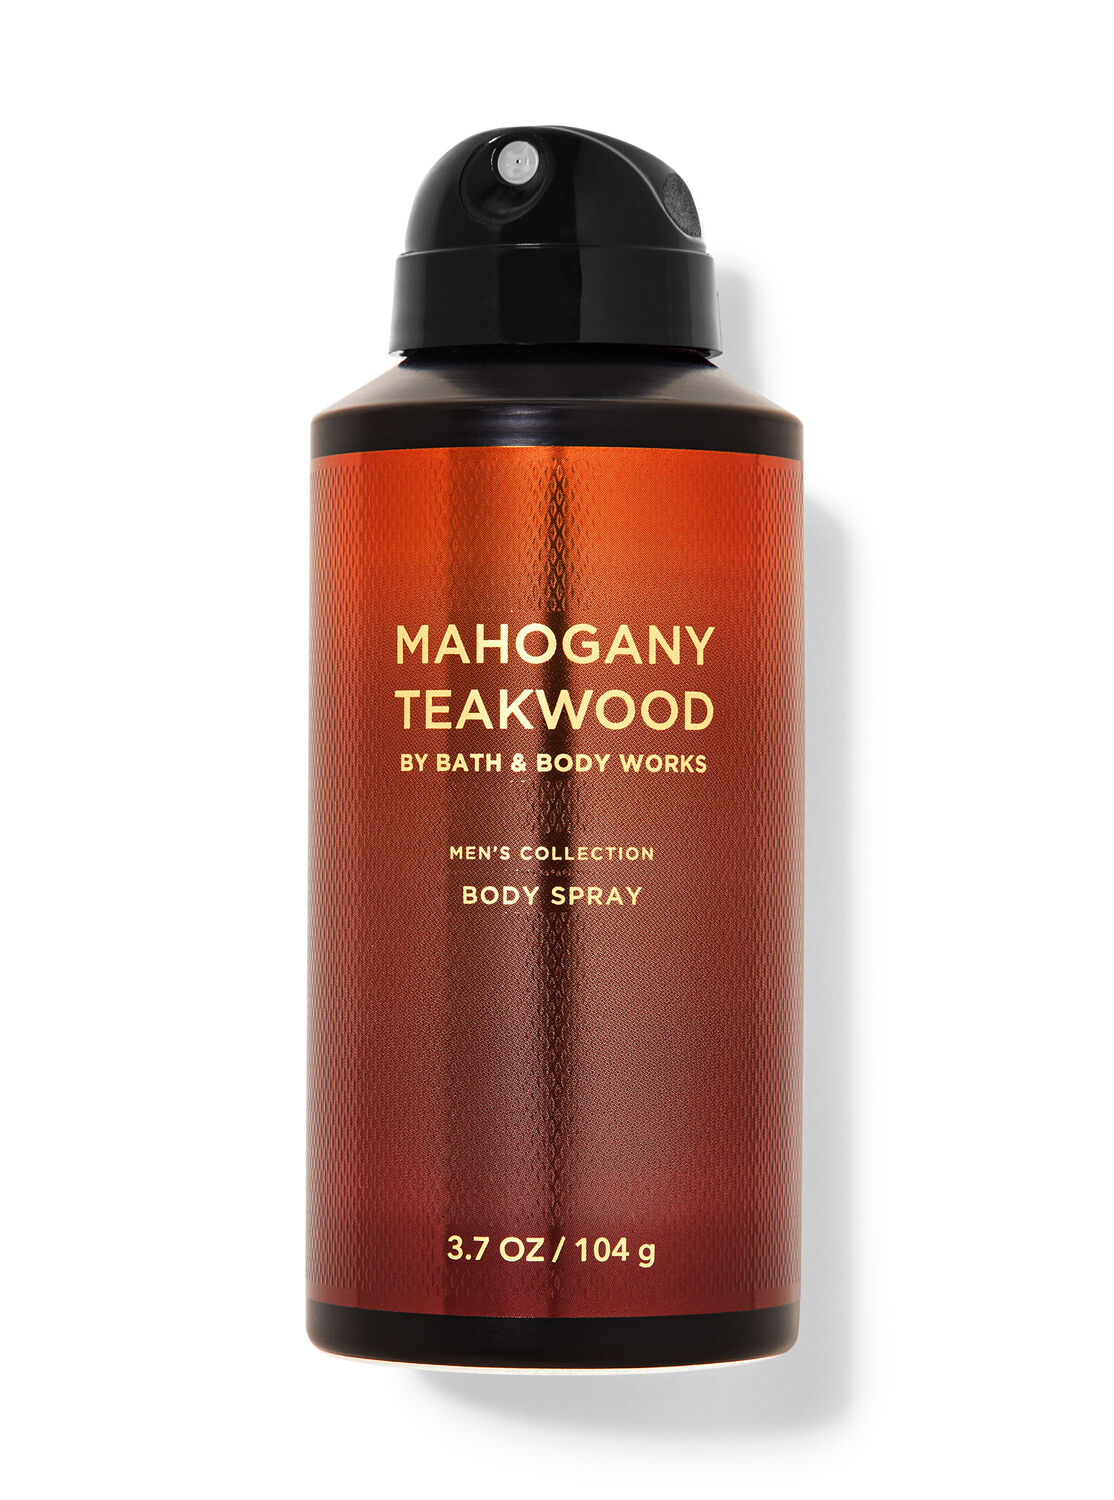 Bath & Body Works Mahogany Teakwood Body Spray